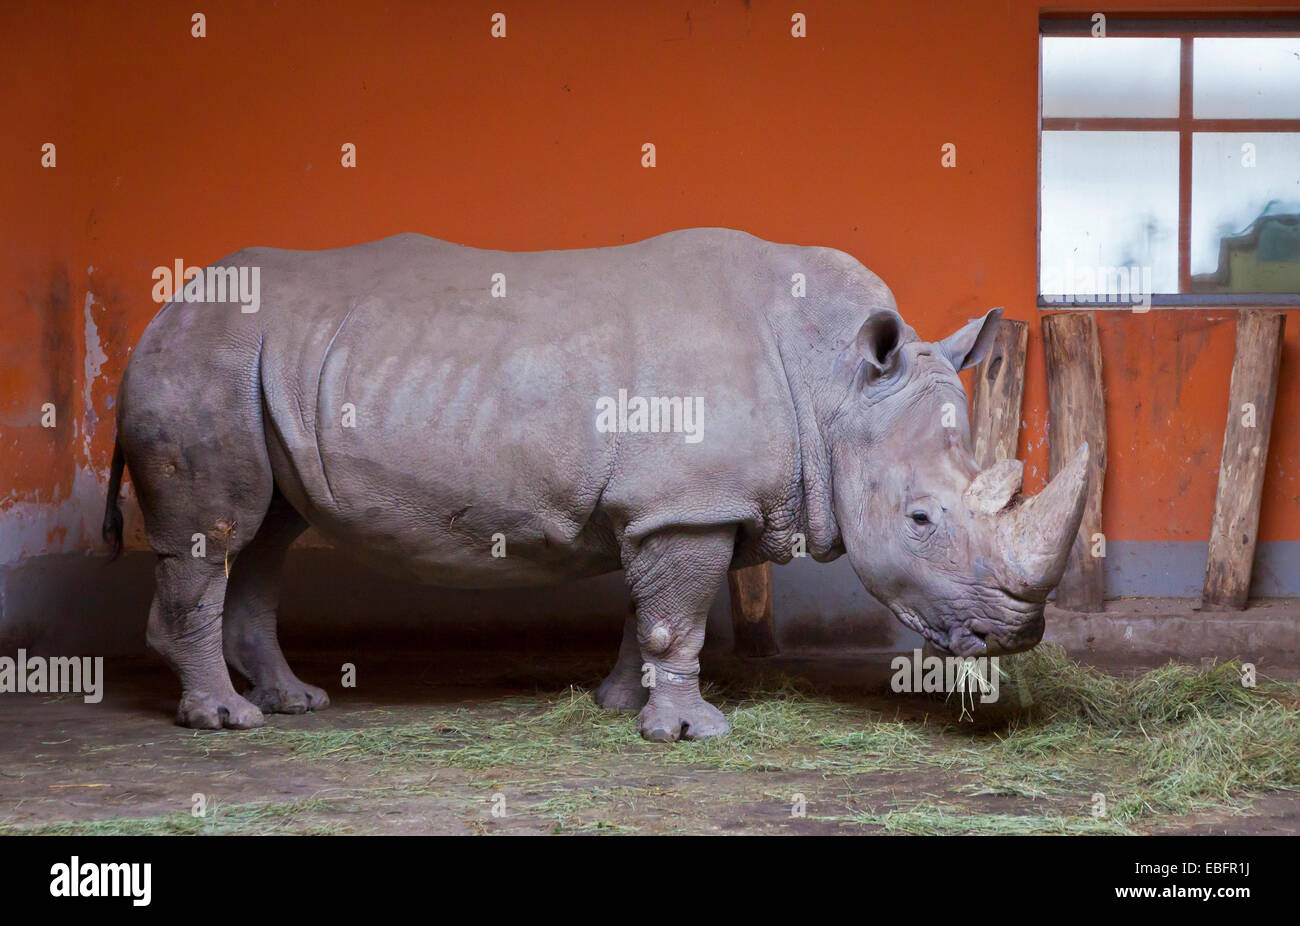 Rhino chews grass in a Zoo aviary Stock Photo